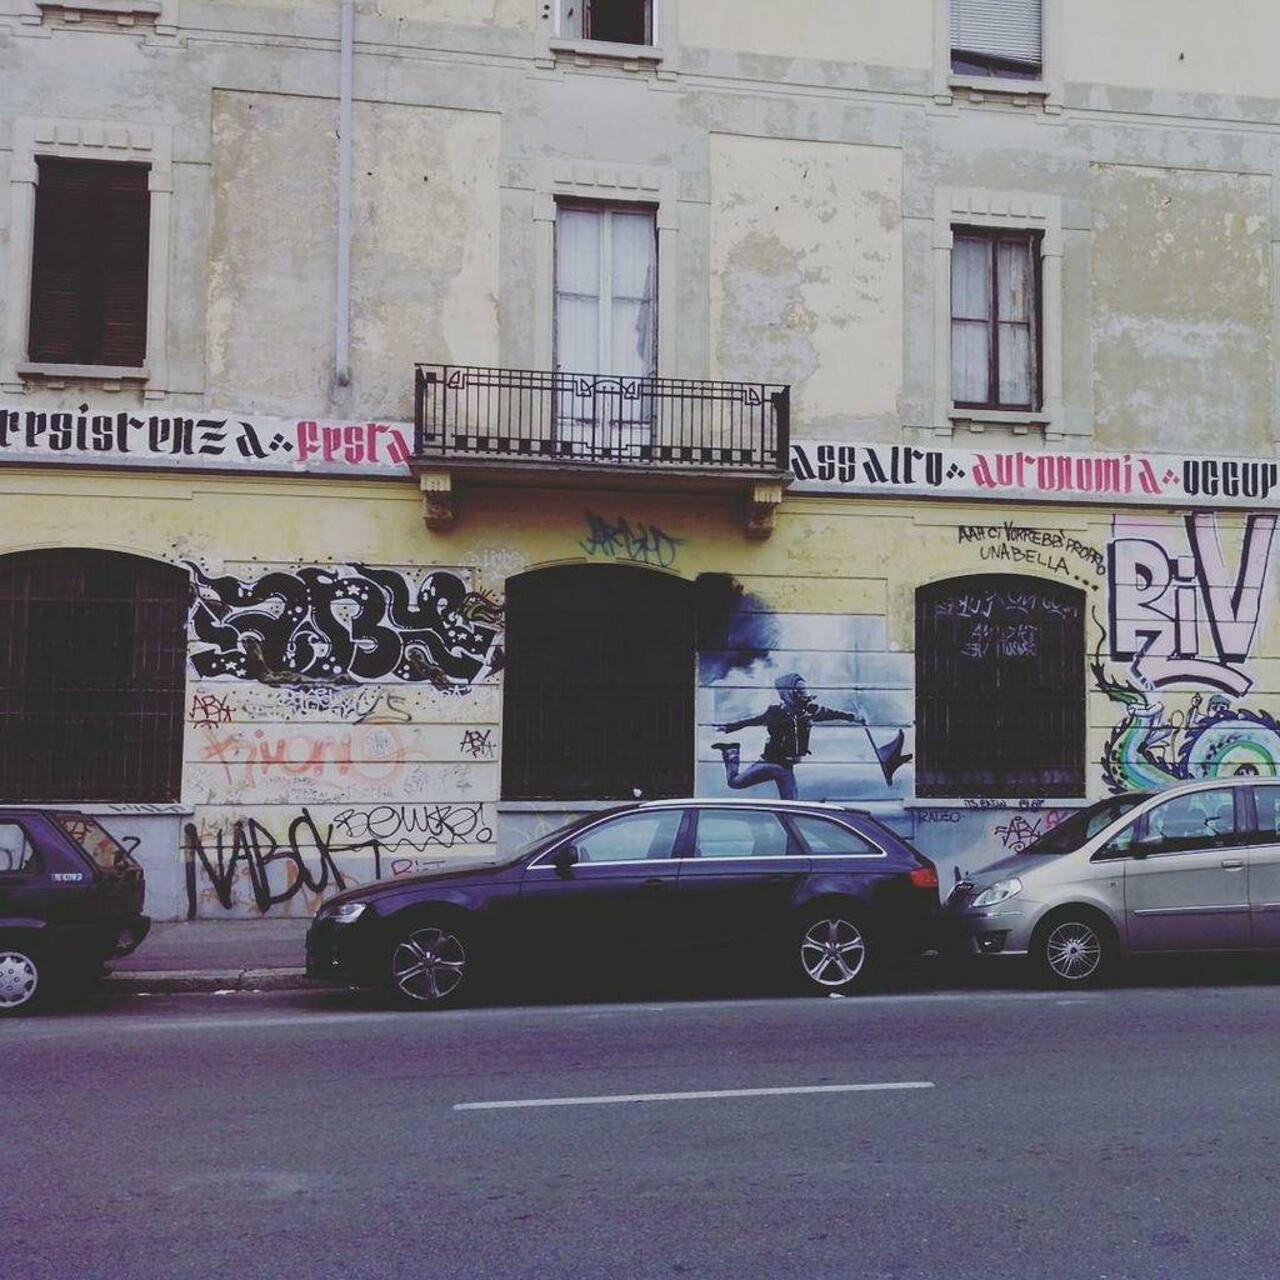 RT @artpushr: via #argusapocraphexx "http://ift.tt/1KZPlOm" #graffiti #streetart http://t.co/hZ07d6KUPd